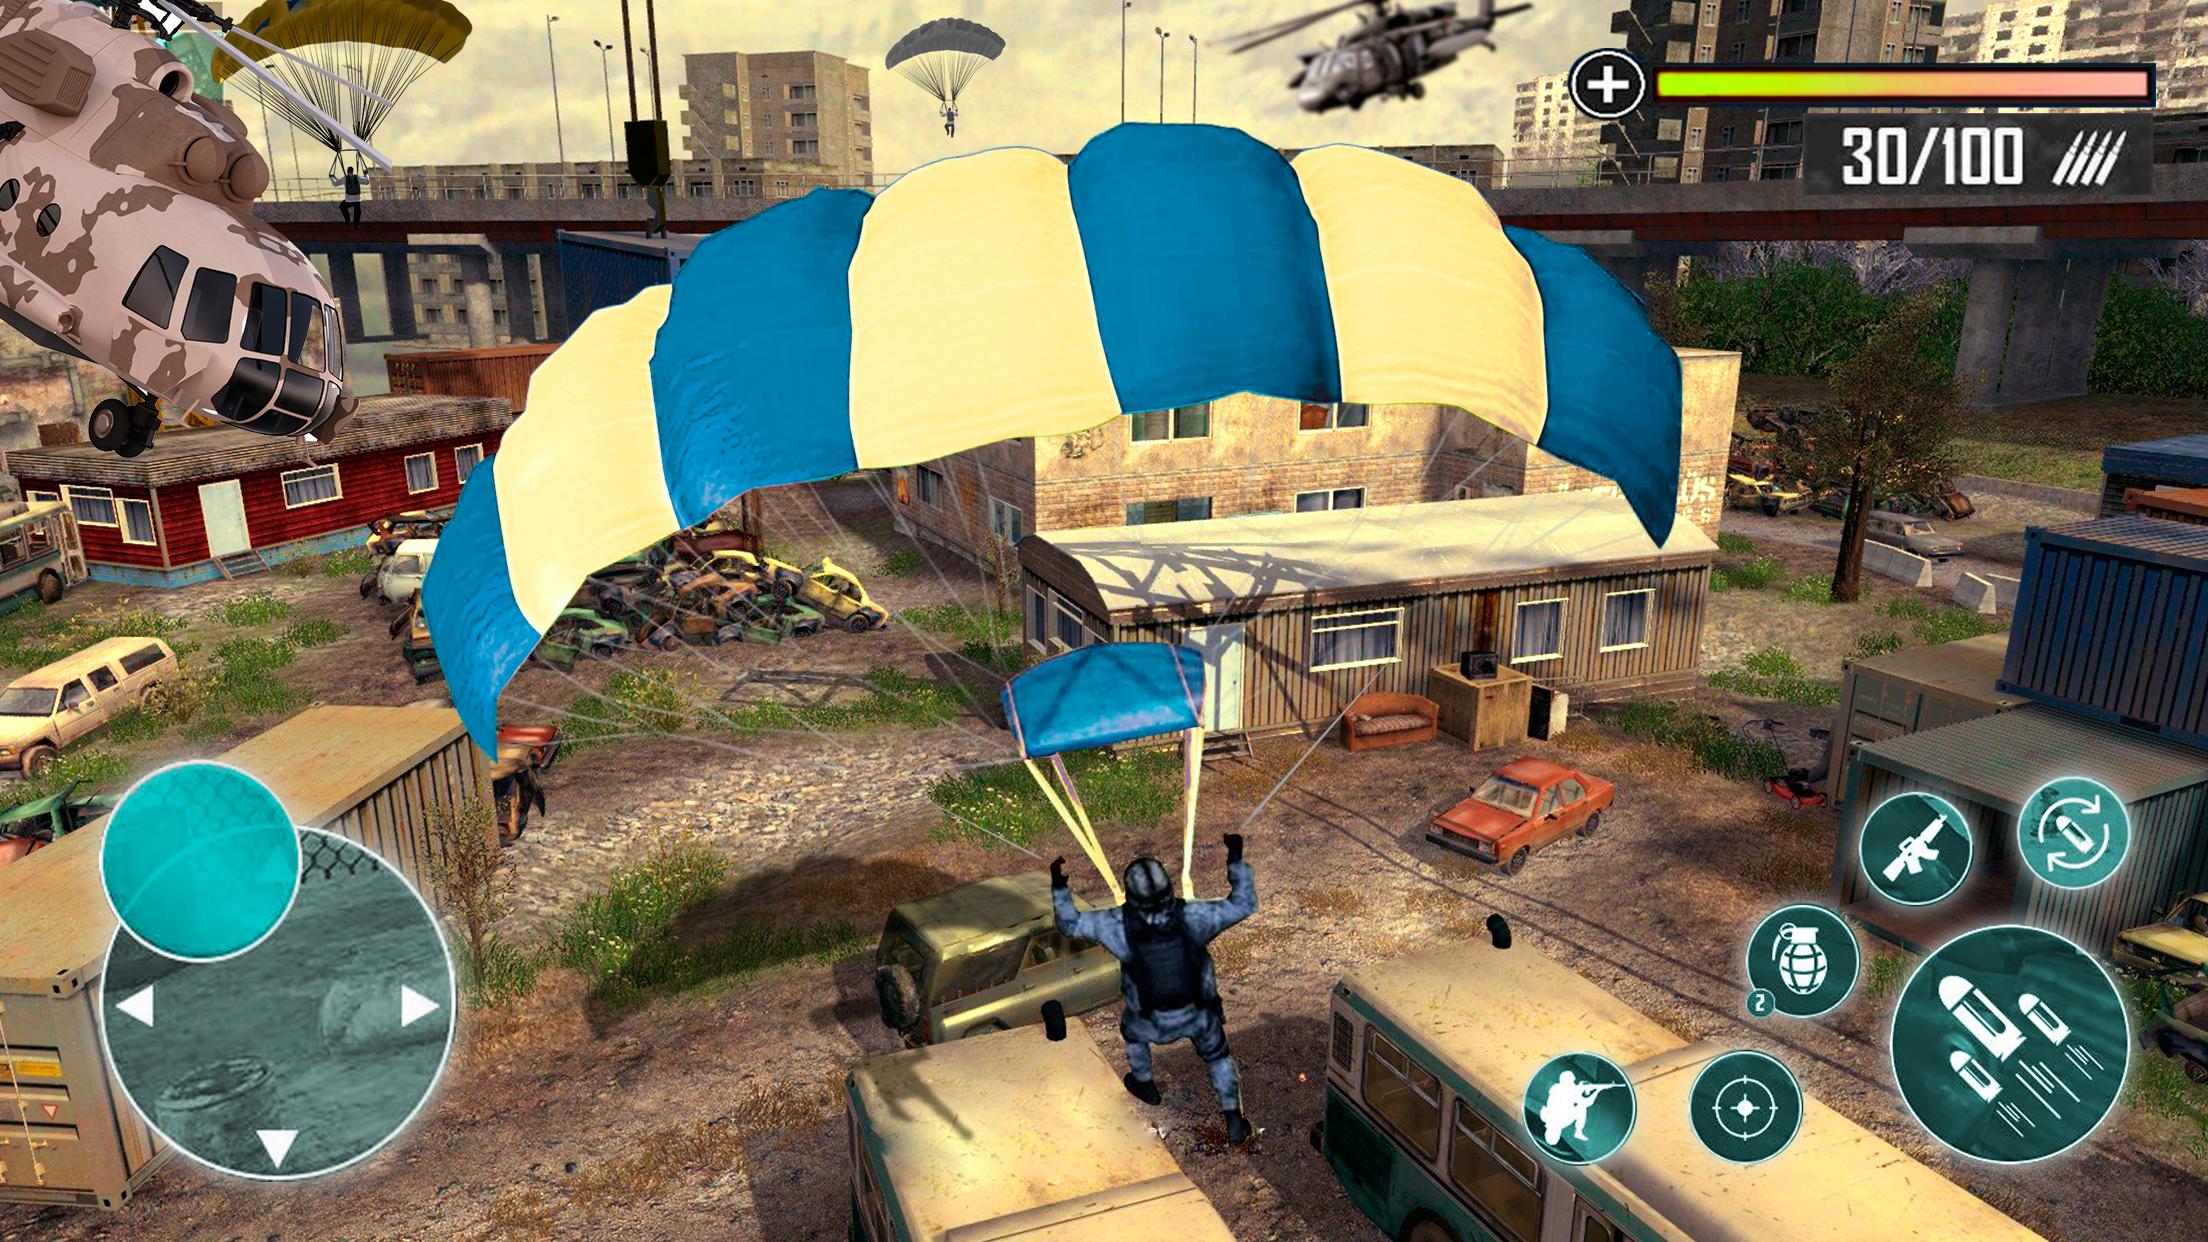 Download Ops war fighter gun games 3d on PC with MEmu